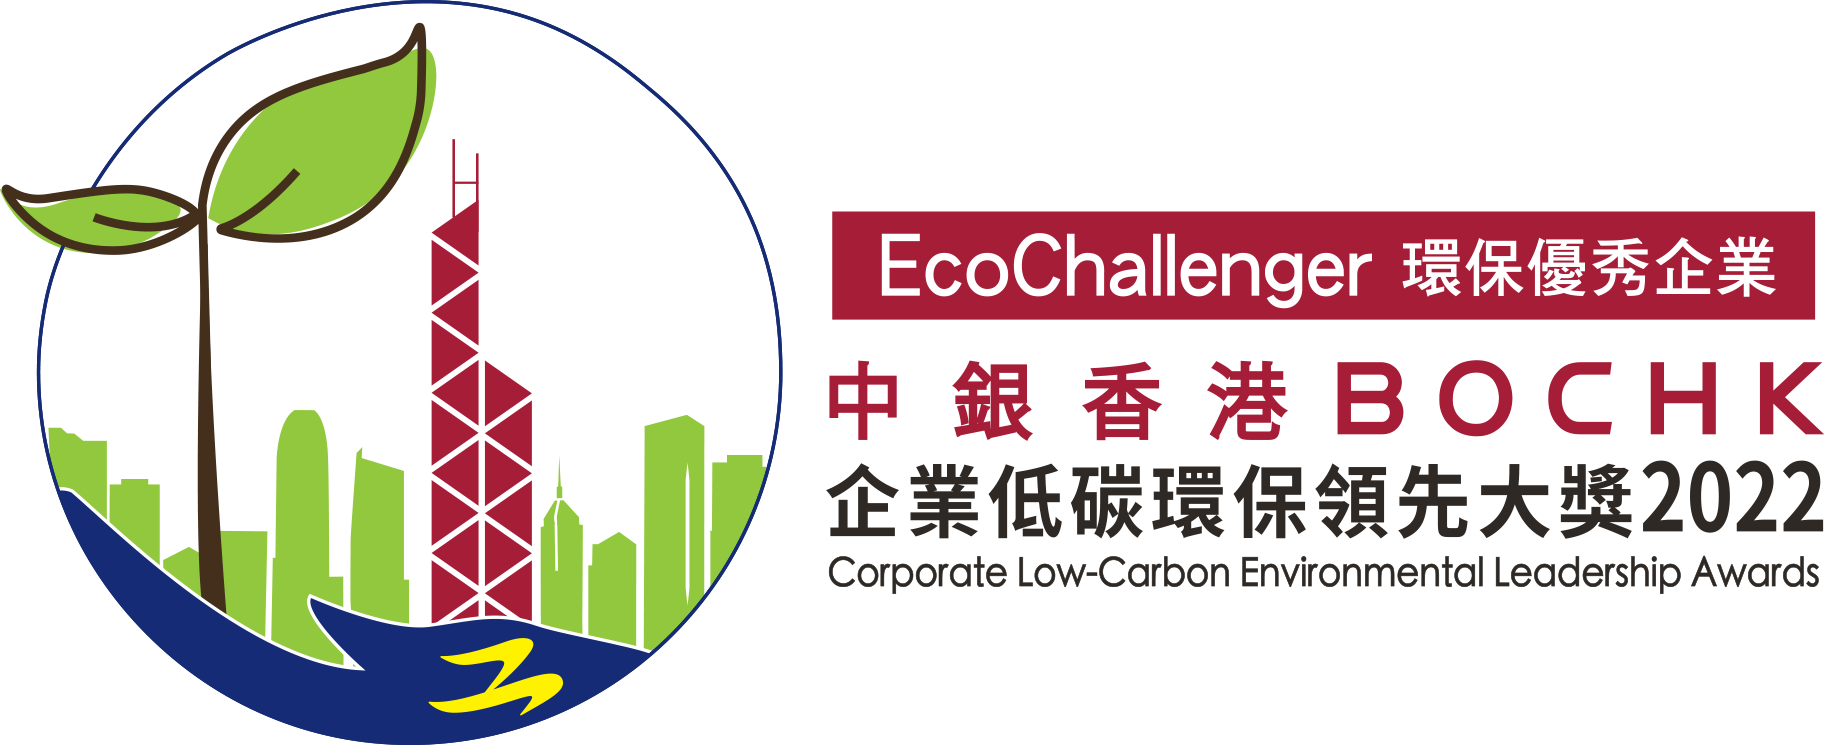 BOCHK Corporate Environmental Leadership Award-EcoChallenger 中銀香港企業環保領先大獎-環保優秀企業